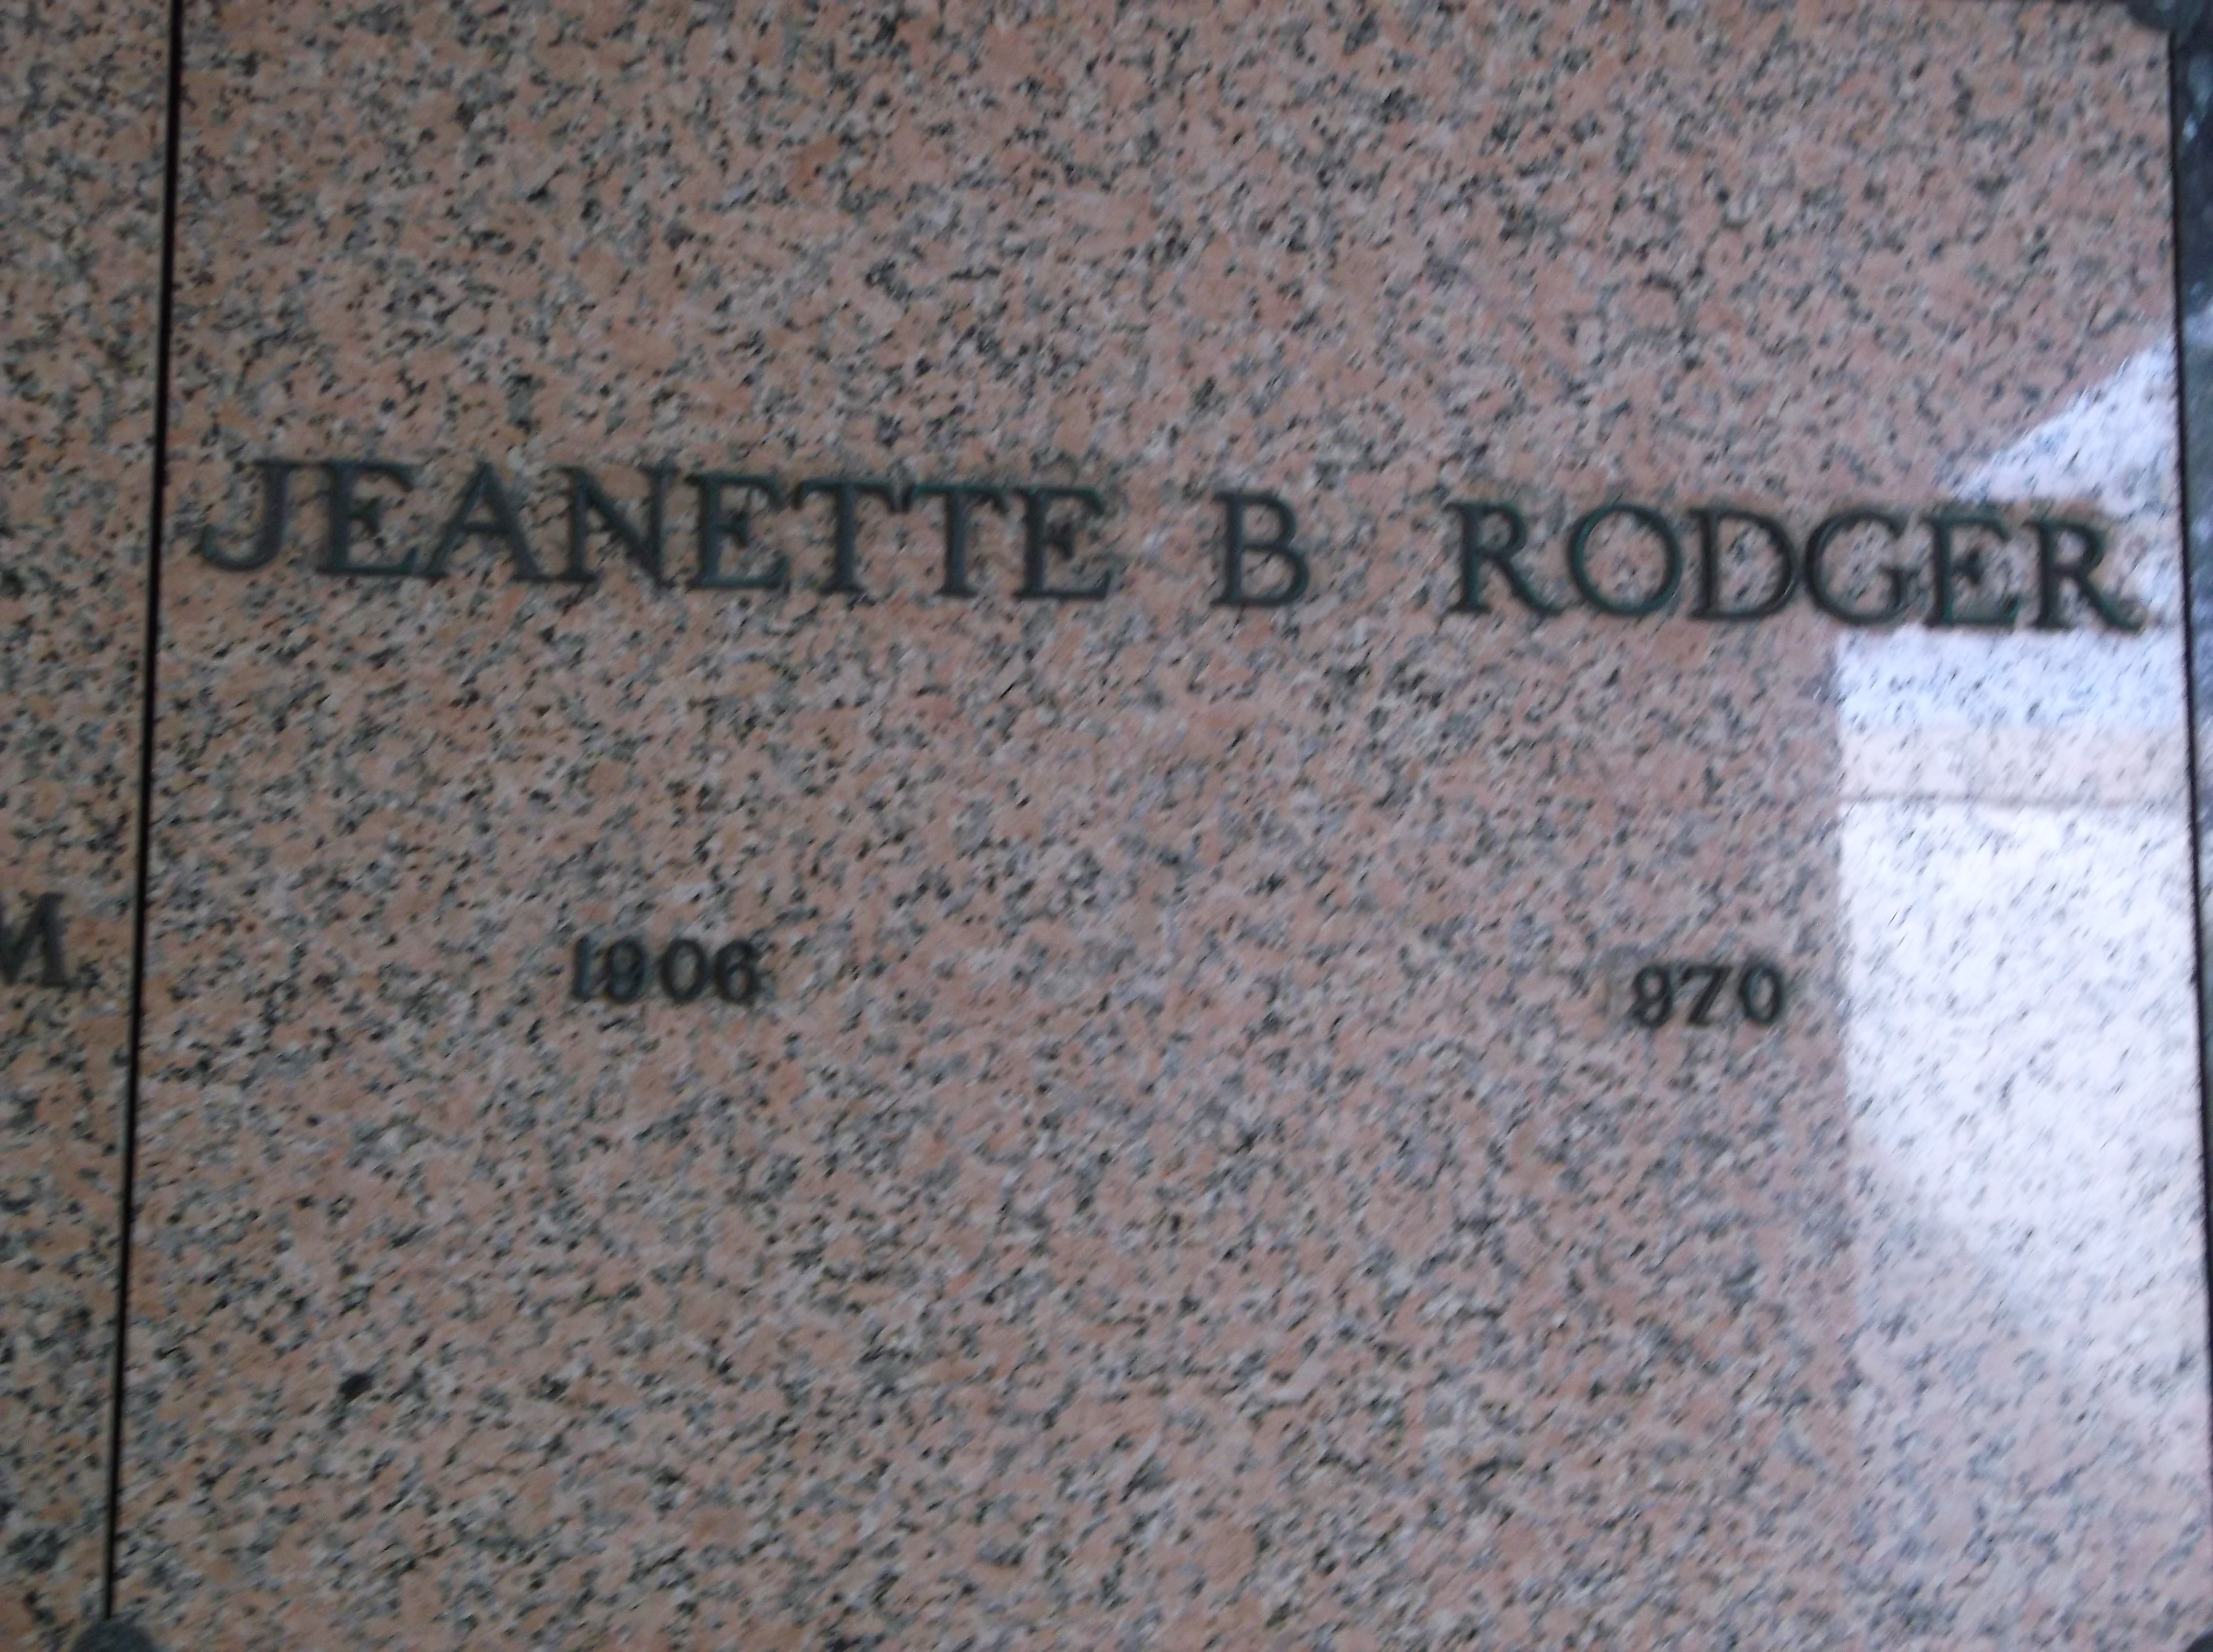 Jeanette B Rodger